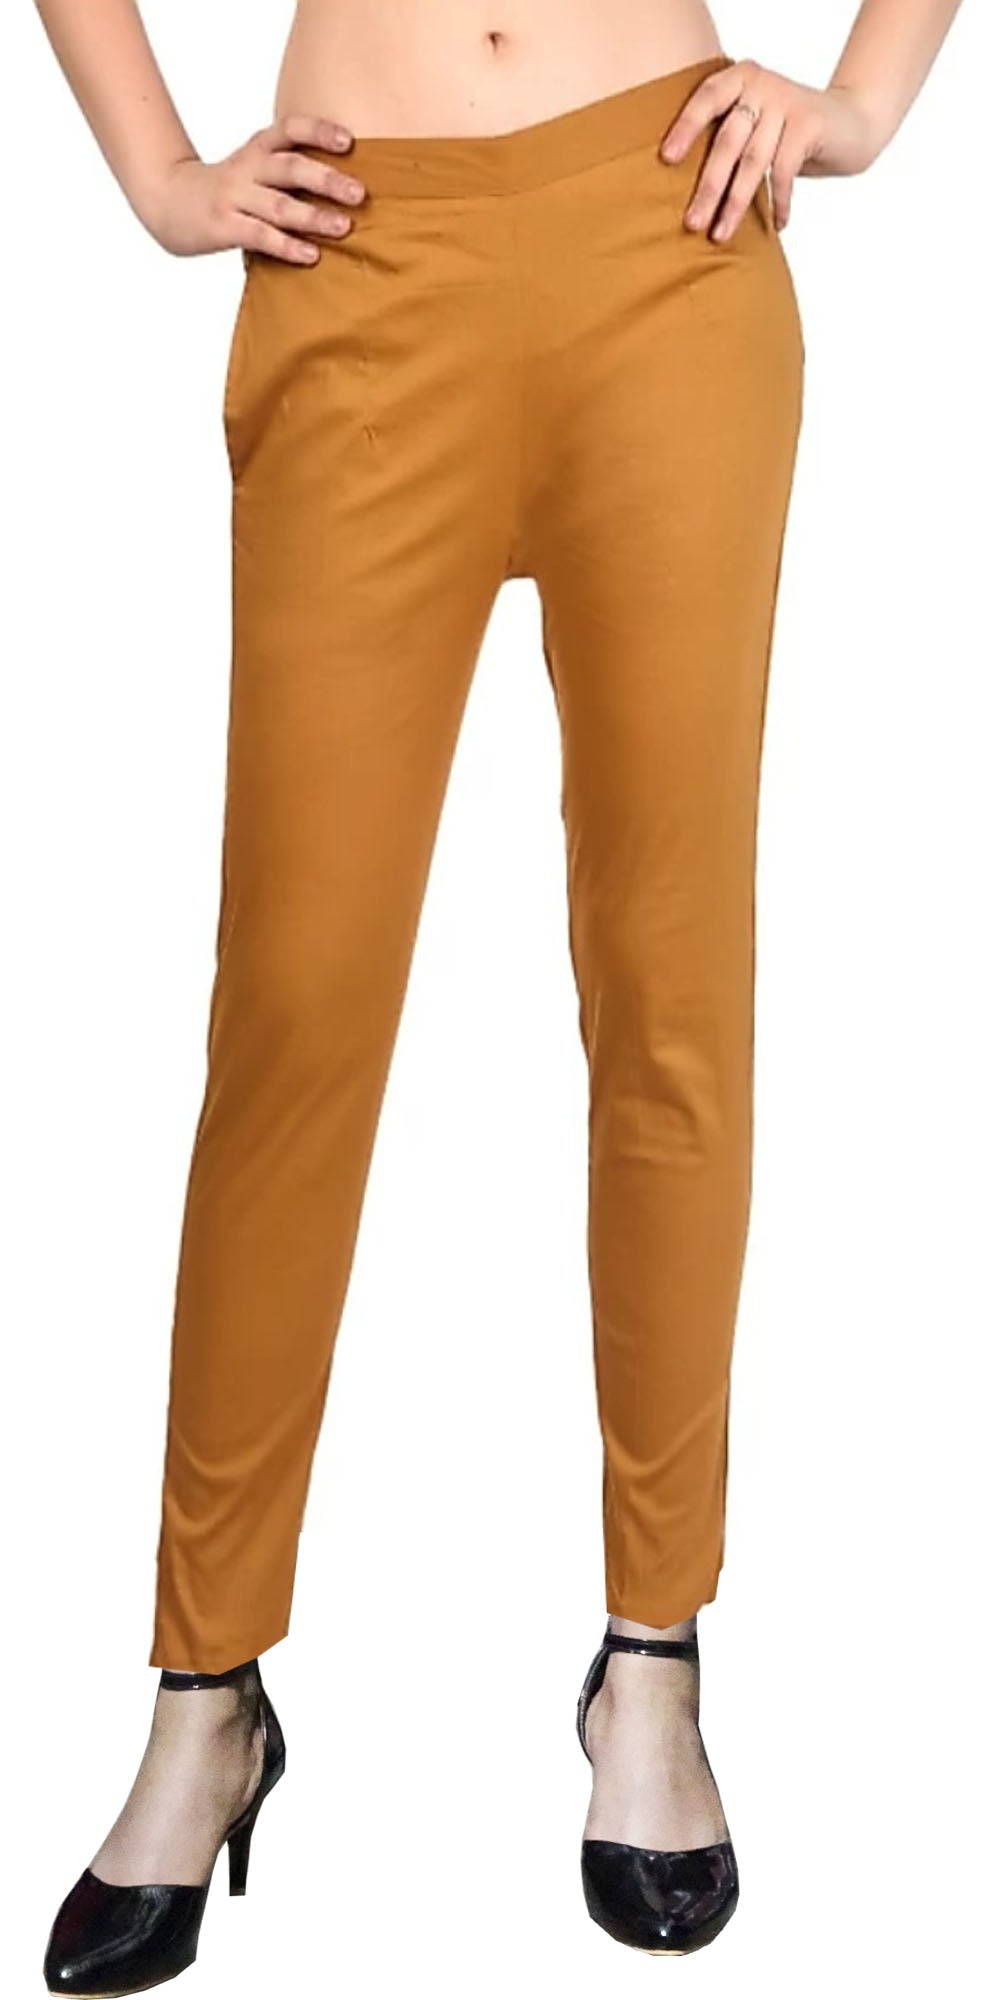 New Men's Basic Skin Color COTTON JEANS Business Pants Regular Straight  Pocket Stretch Pants Trending Fashion